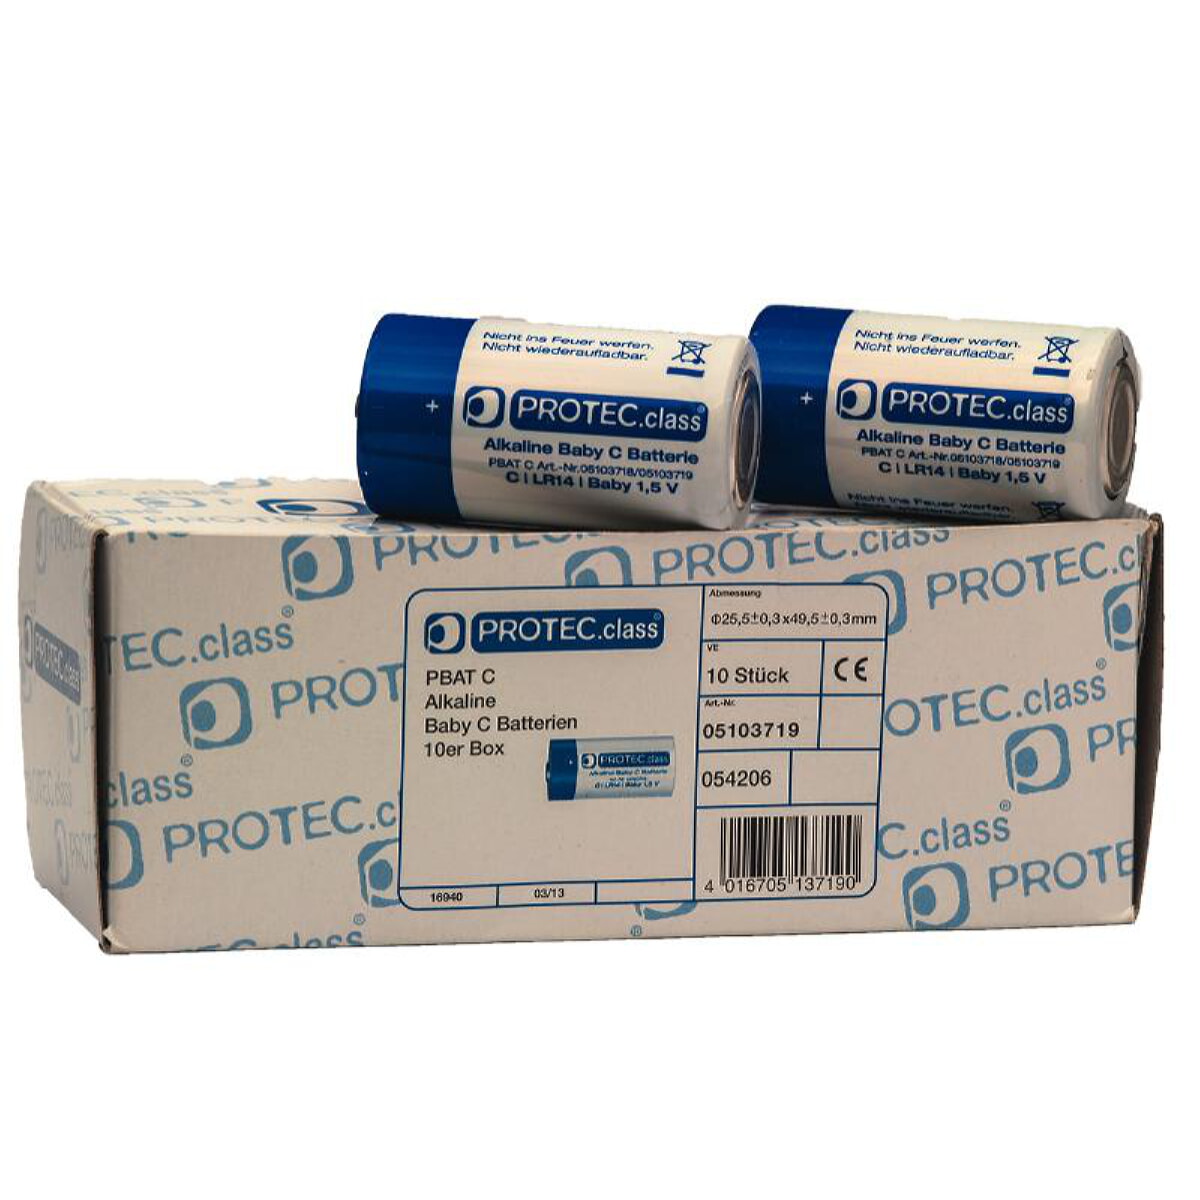 PROTEC.class Batterie PBAT C Baby 10Box